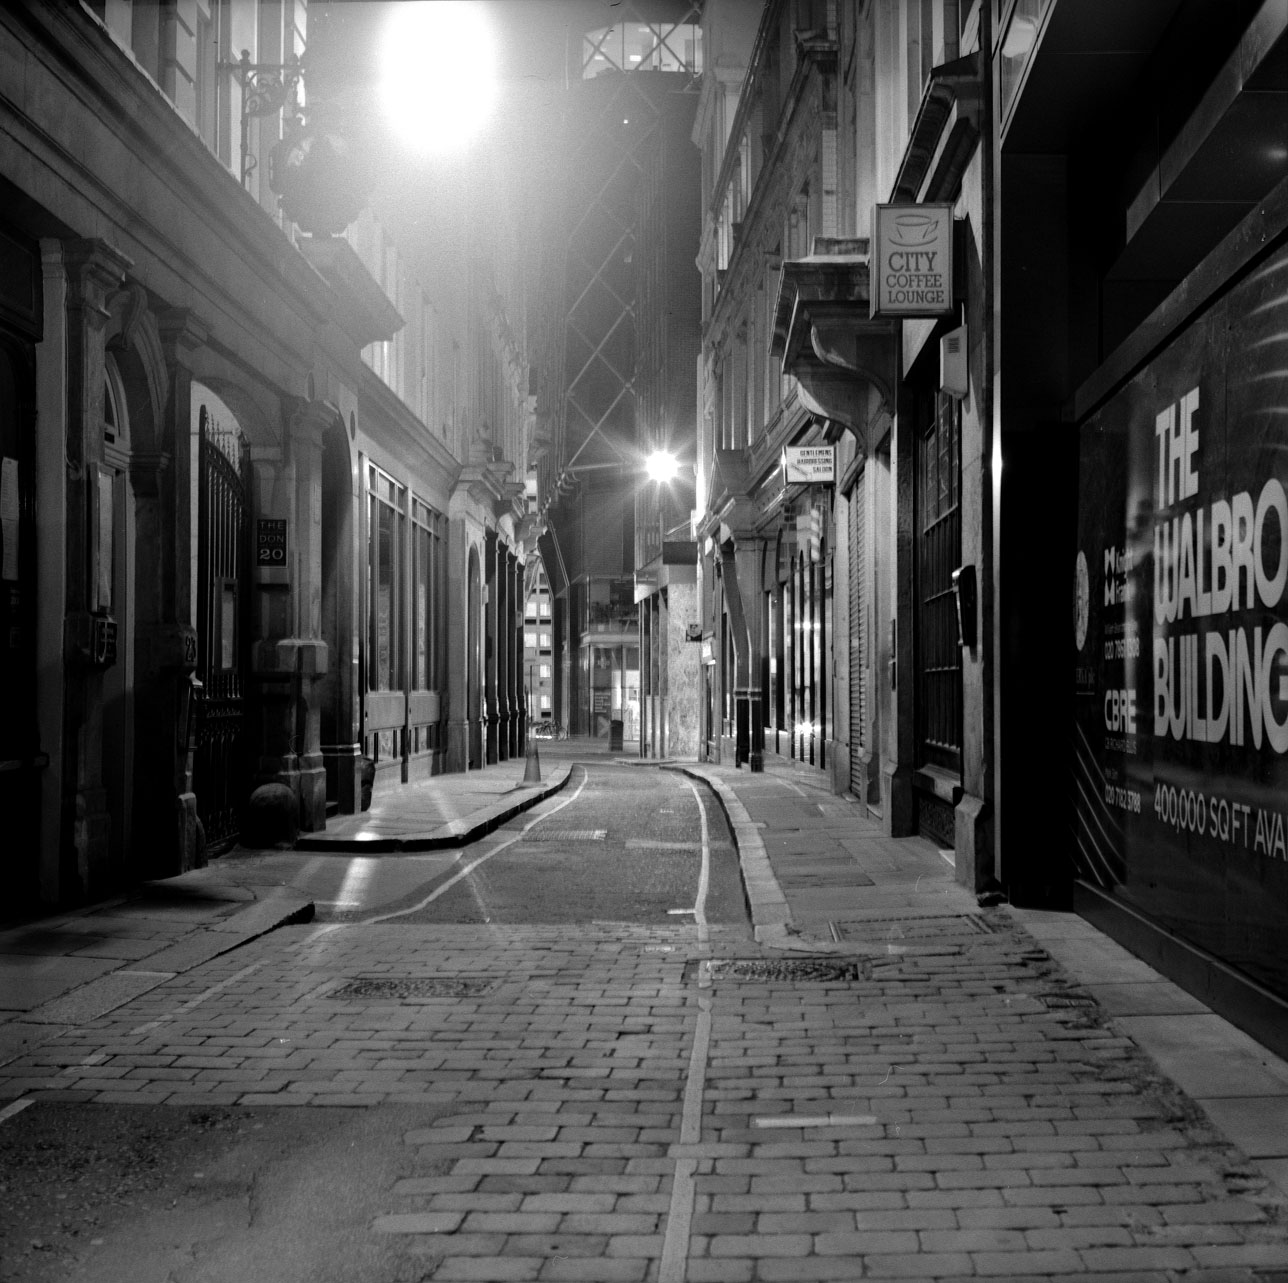 fotka / image St. Swithin's Lane, Night in London